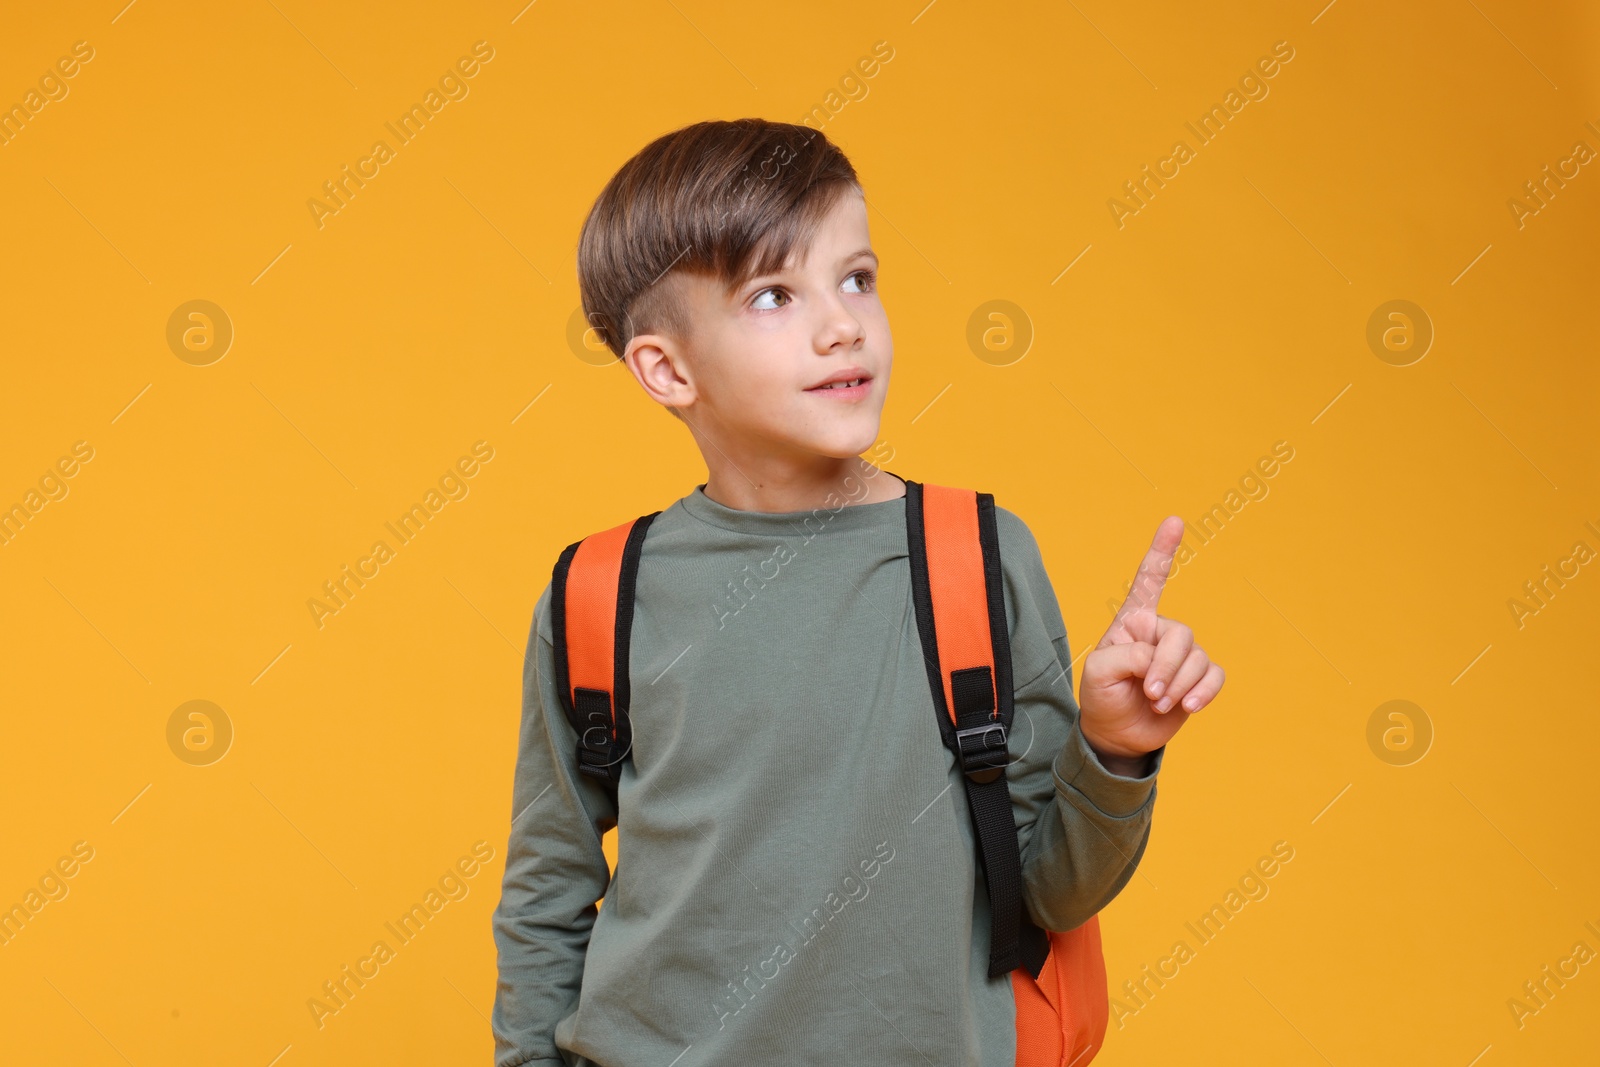 Photo of Cute schoolboy pointing upwards on orange background